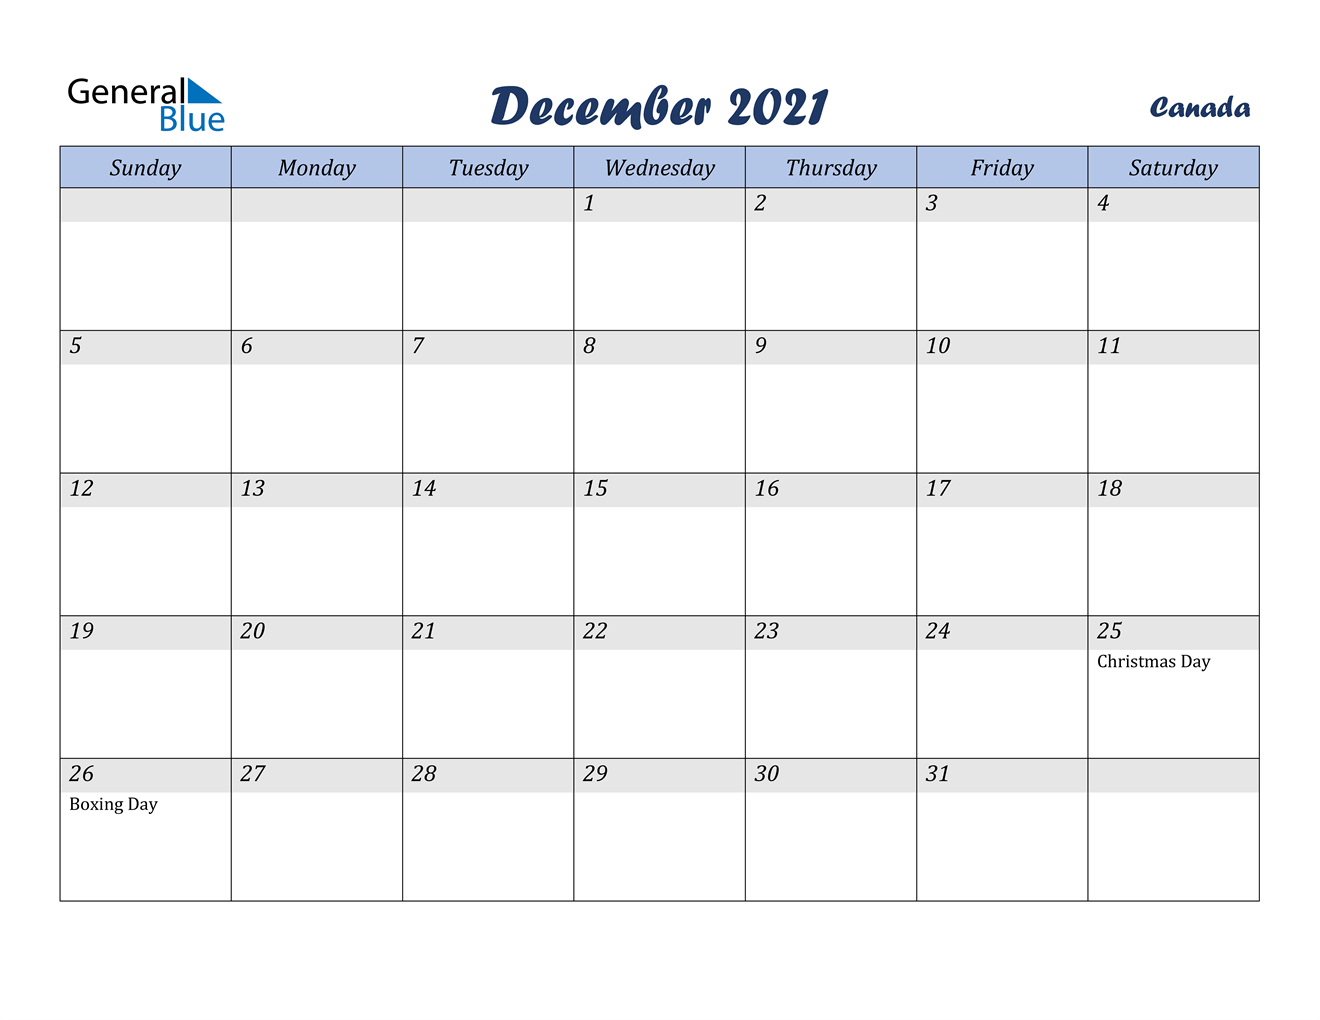 December 2021 Calendar - Canada December 2021 Calendar With Holidays Canada